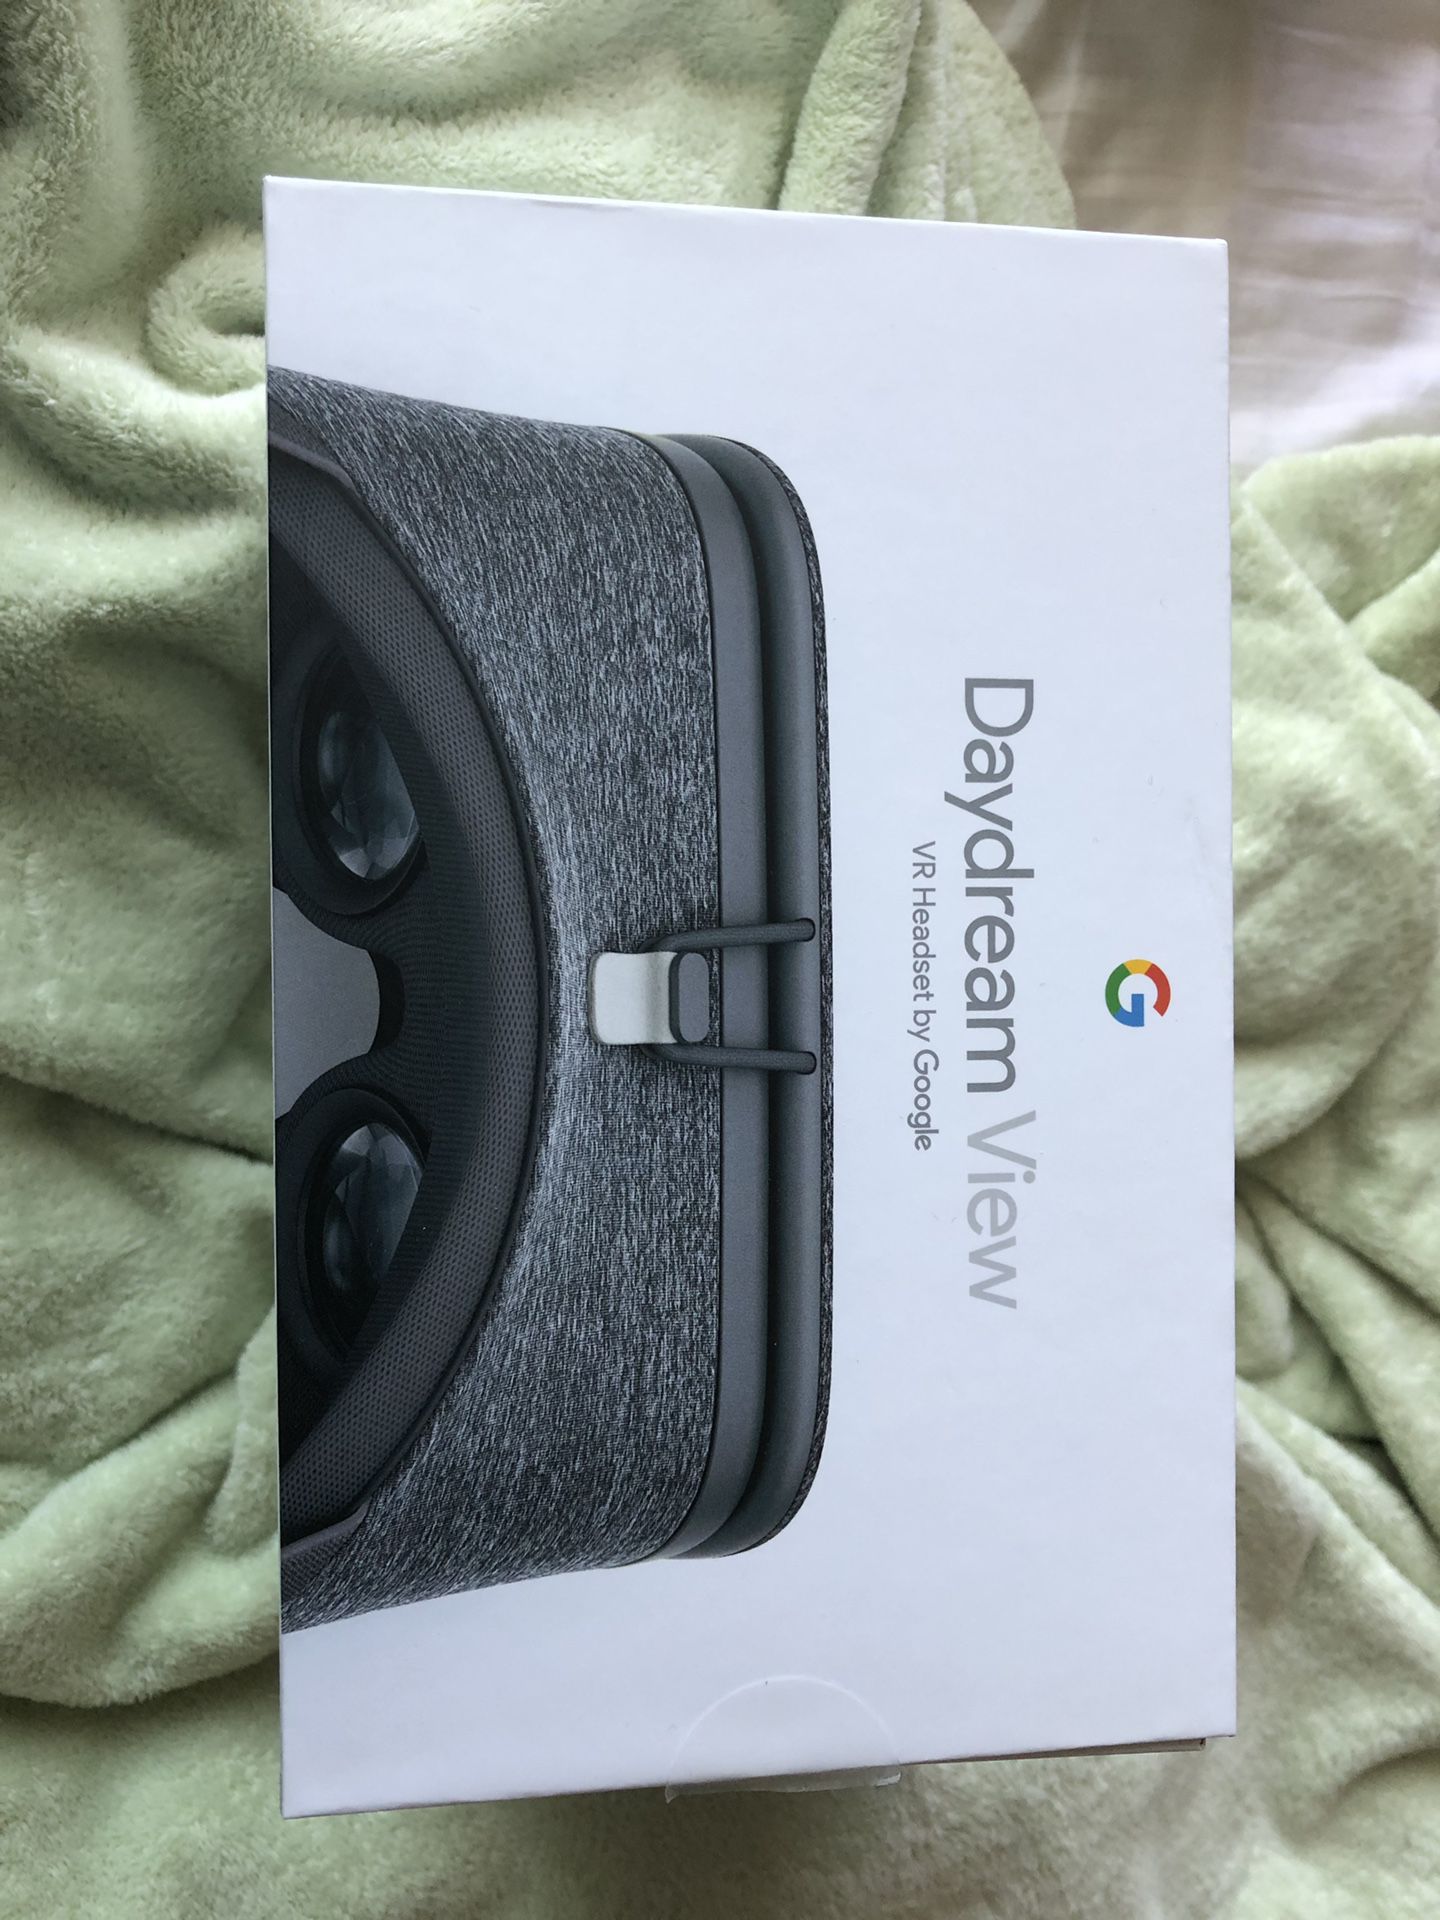 Daydream view google VR headset